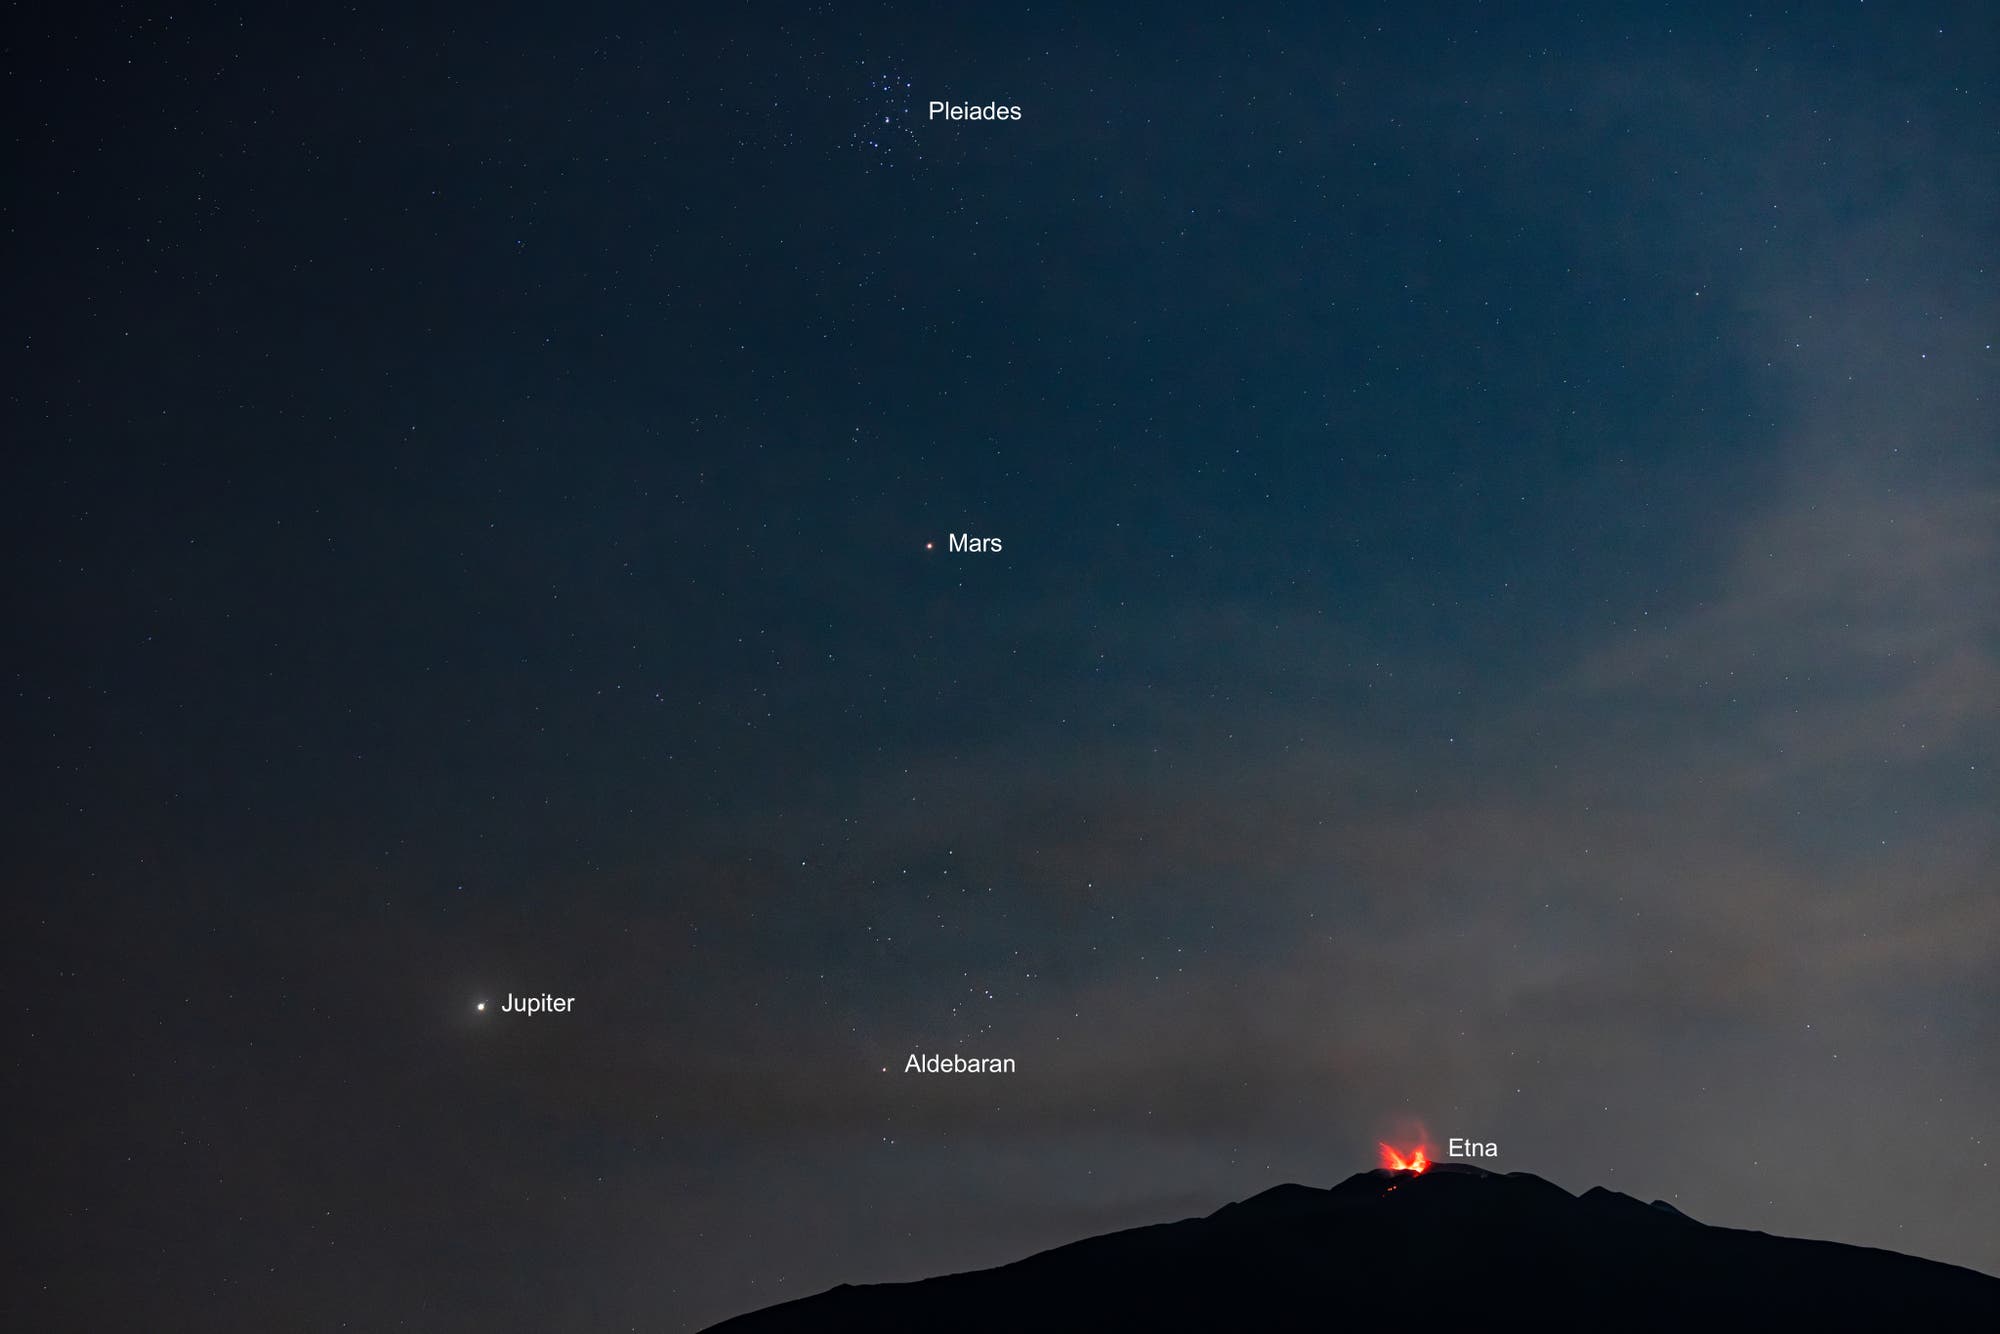 Conjunction over the erupting Etna volcano